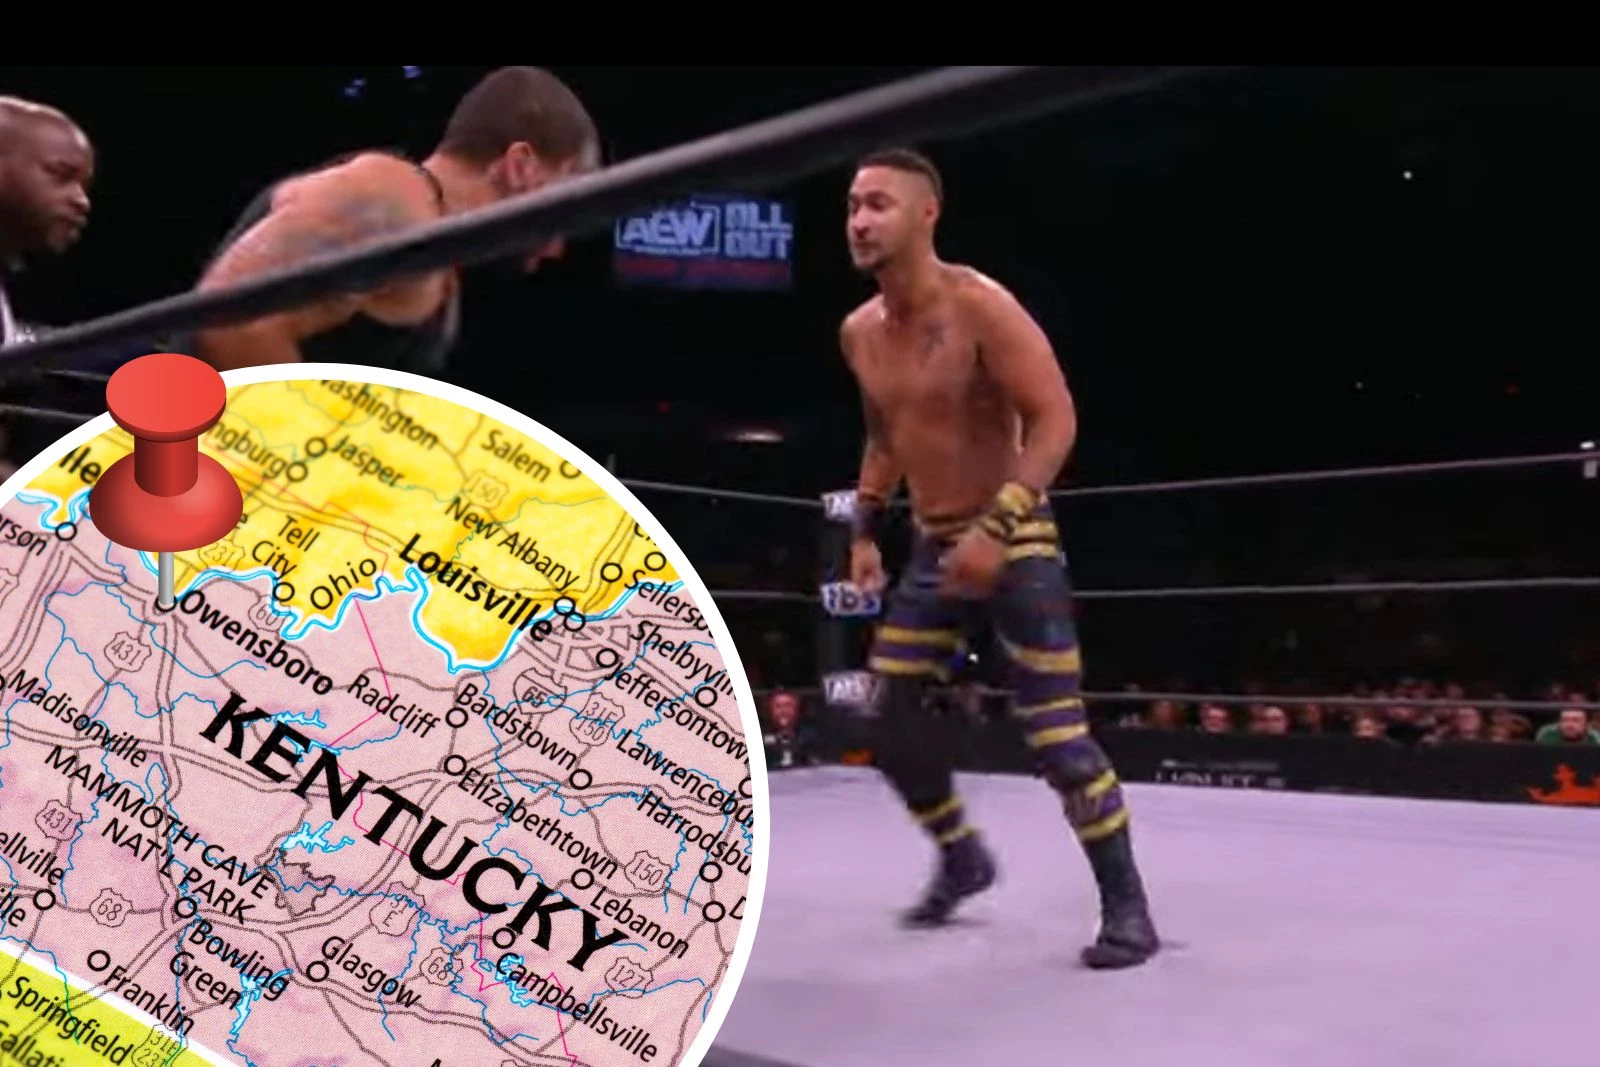 Kurt Angle Reacts To AEW's Kenny Omega Naming Him His Favorite Wrestler